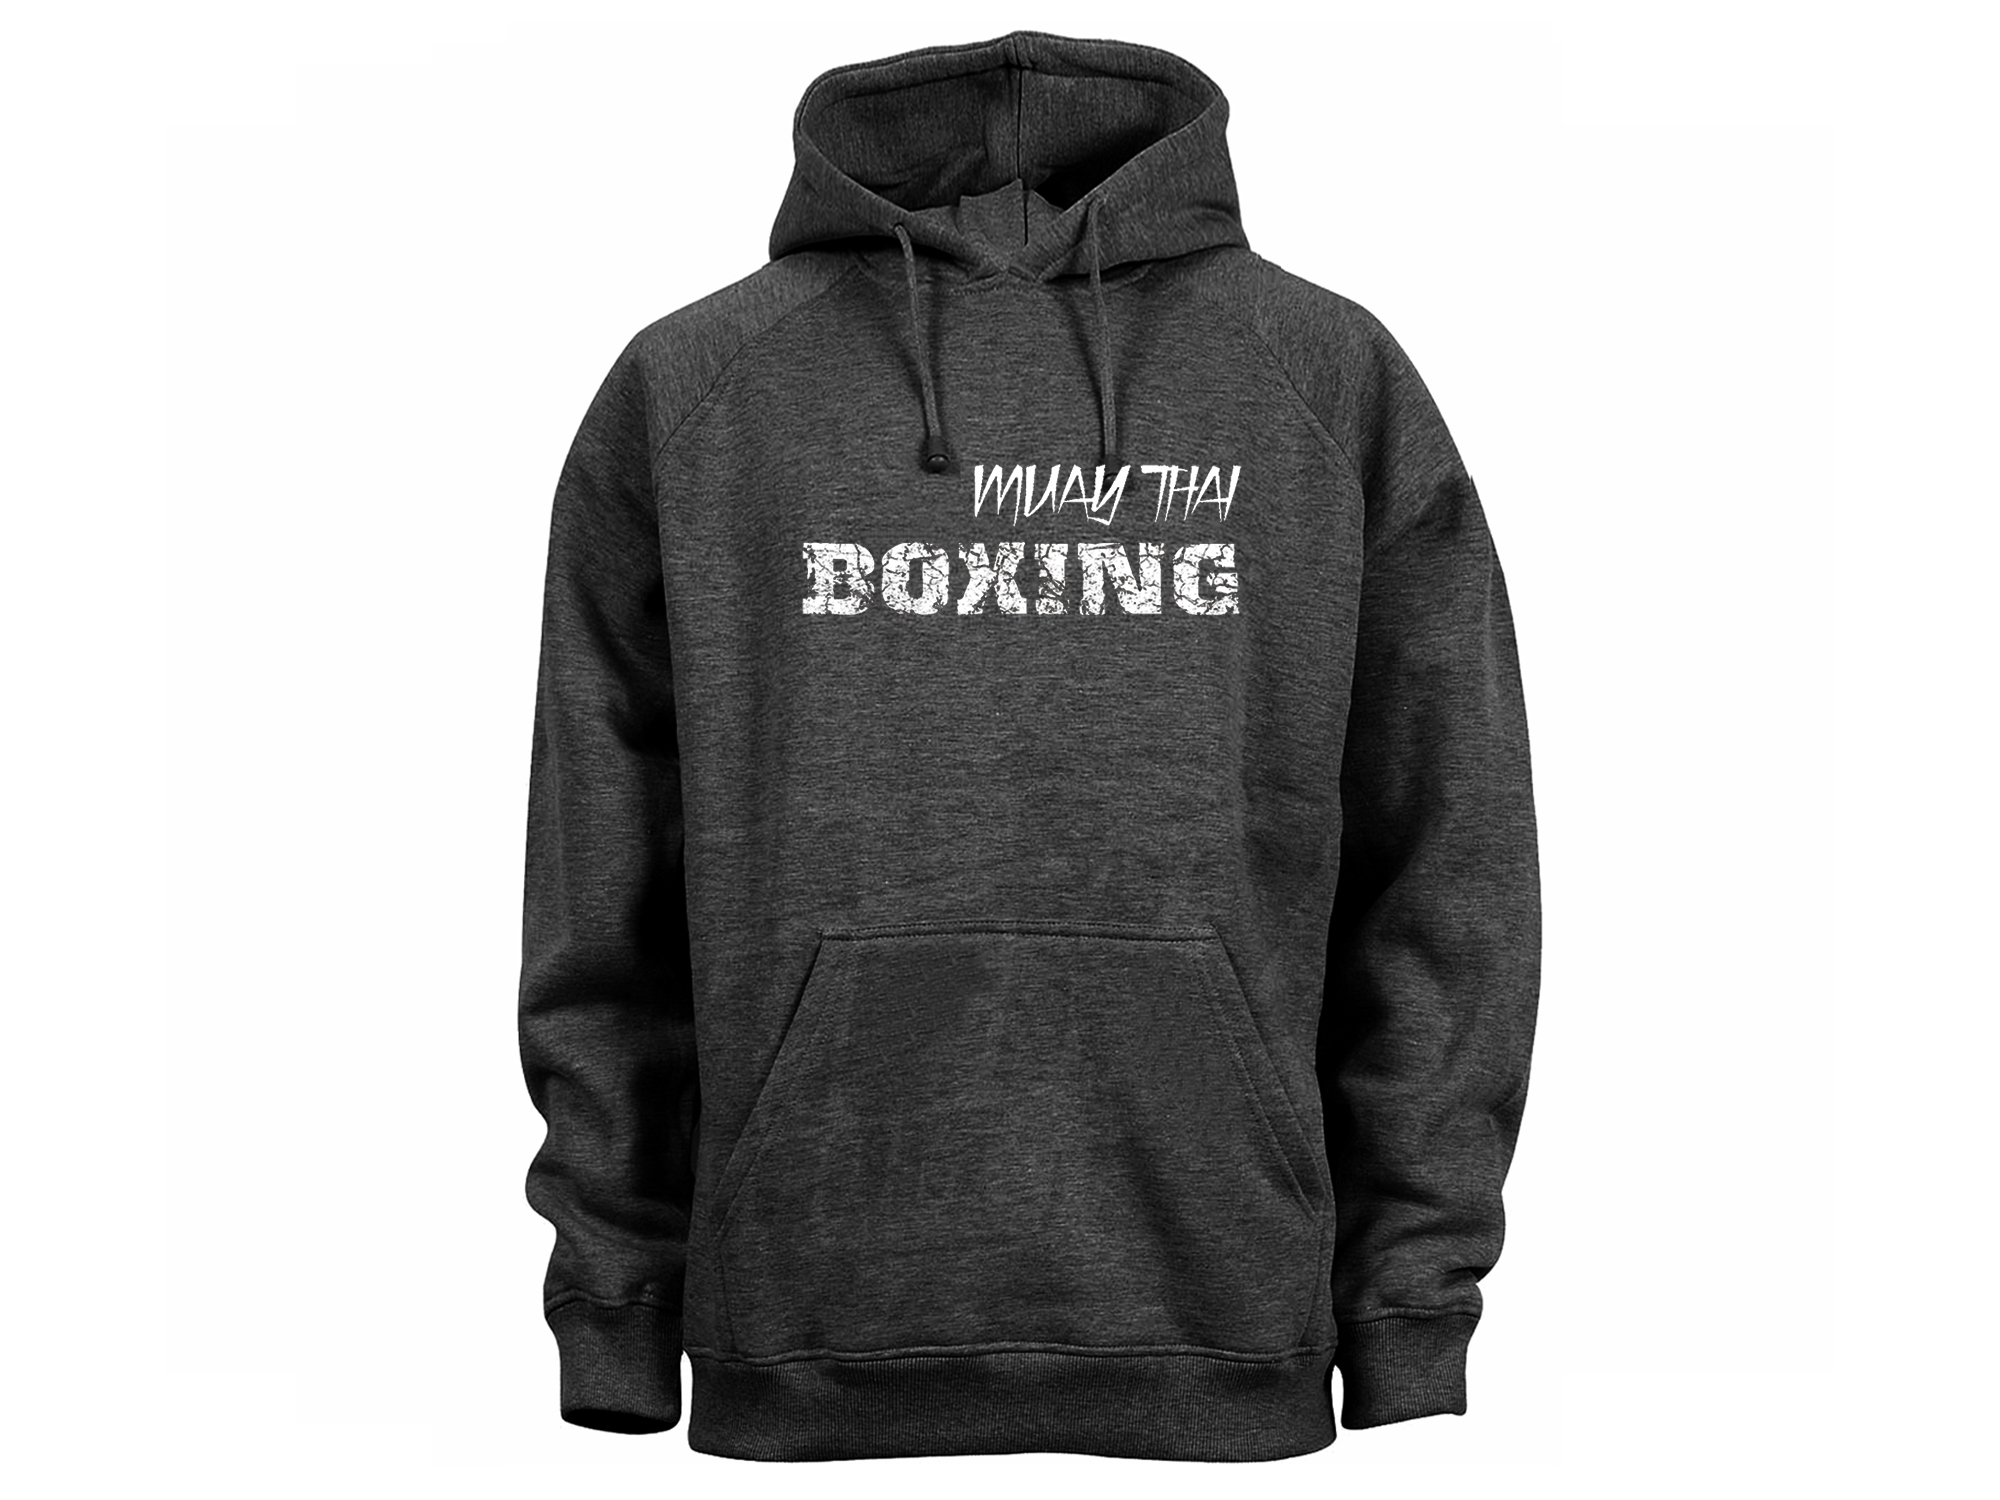 Muay Thai boxing graphic heather gray new  hoodie